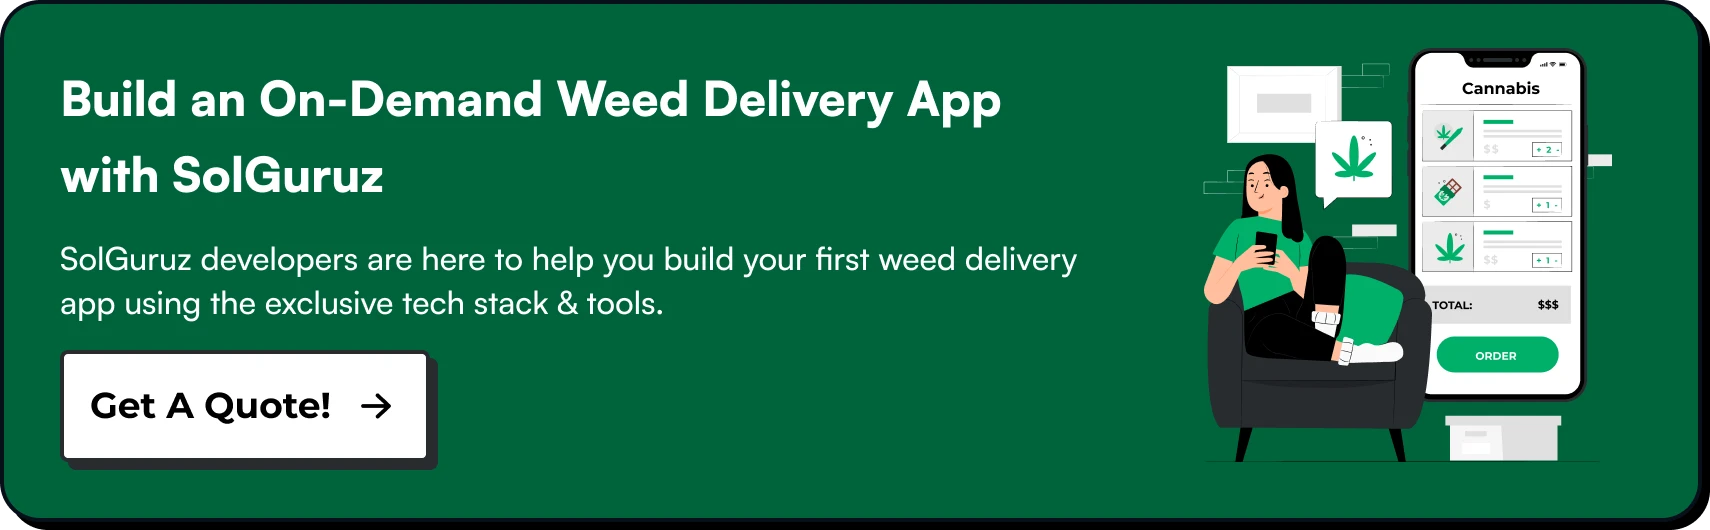 Build an On-Demand Weed Delivery App with SolGuruz